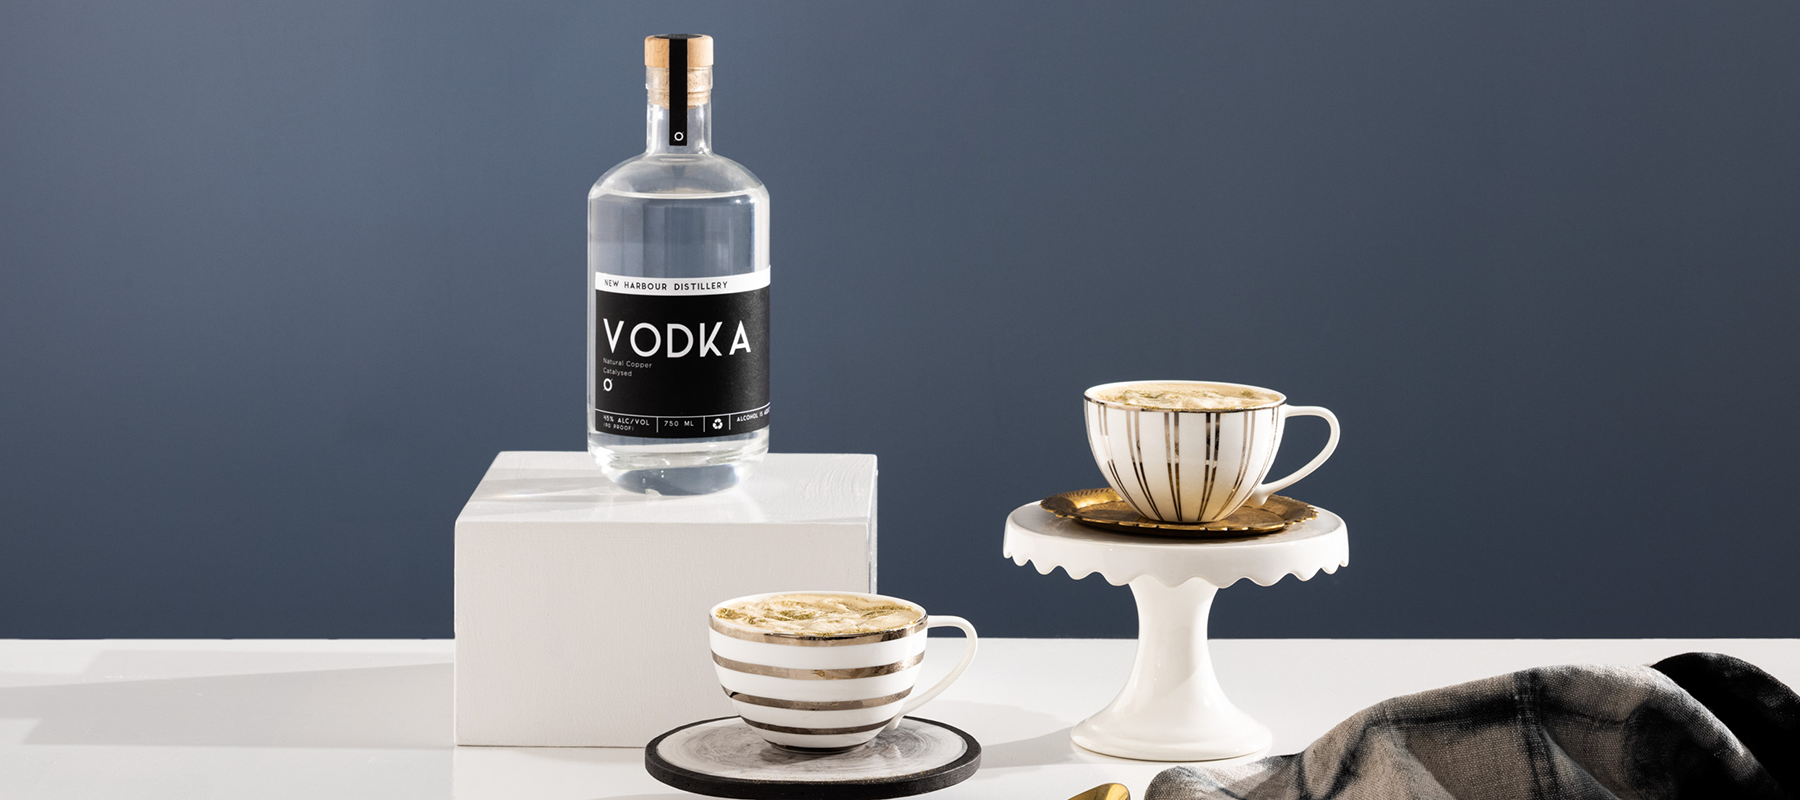 Raise Your Glasses, it’s International Vodka Day!